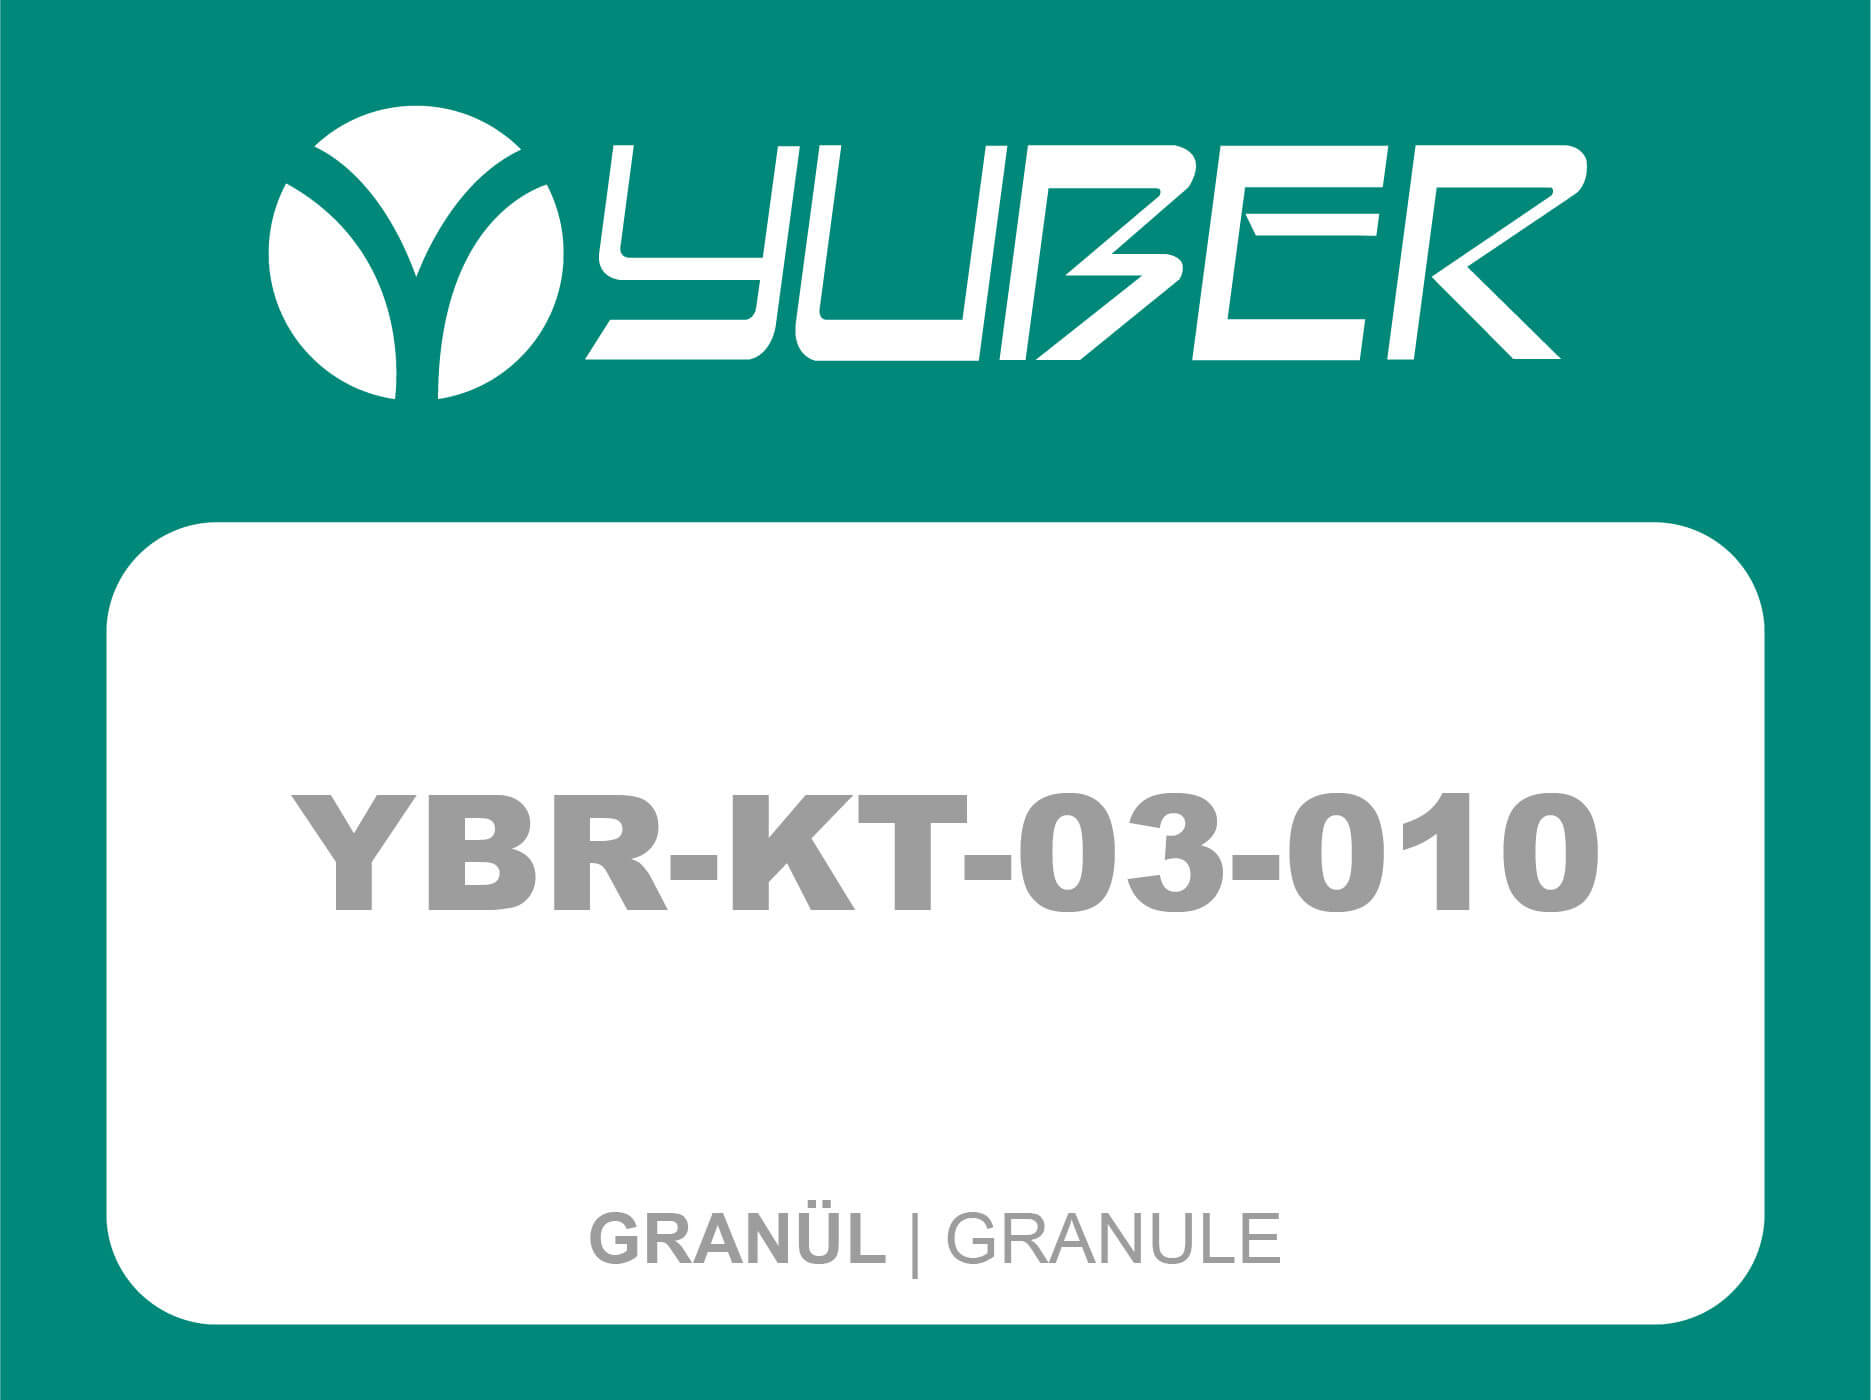 YBR KT 03 010 Granule Yuber Metallurgy